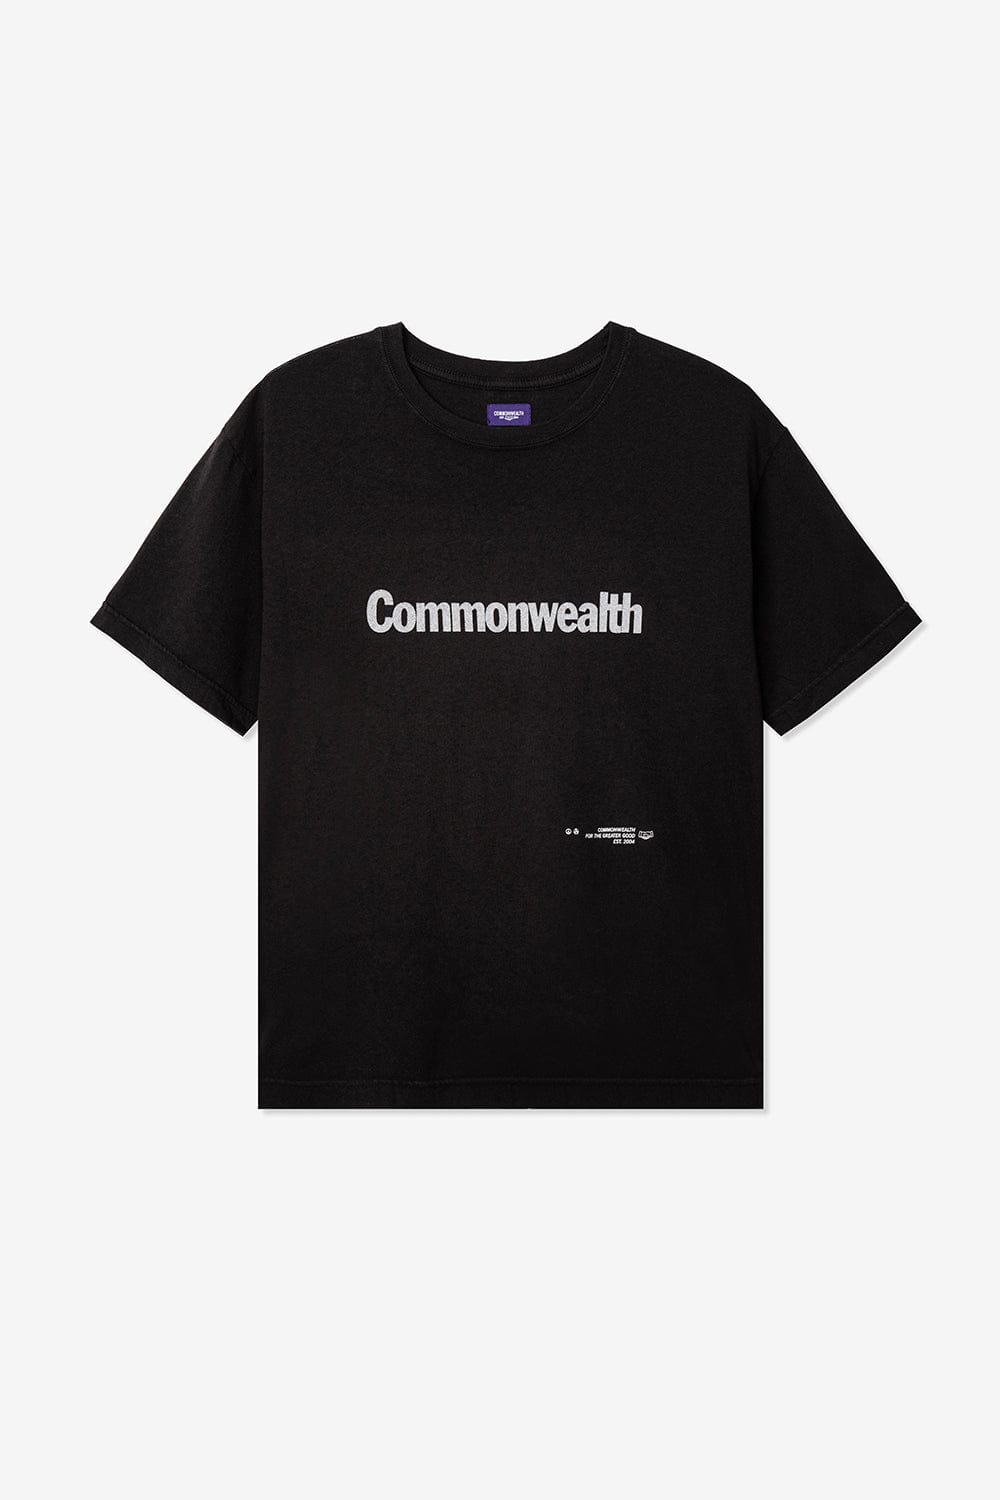 Commonwealth Equipment Tee (Phantom)